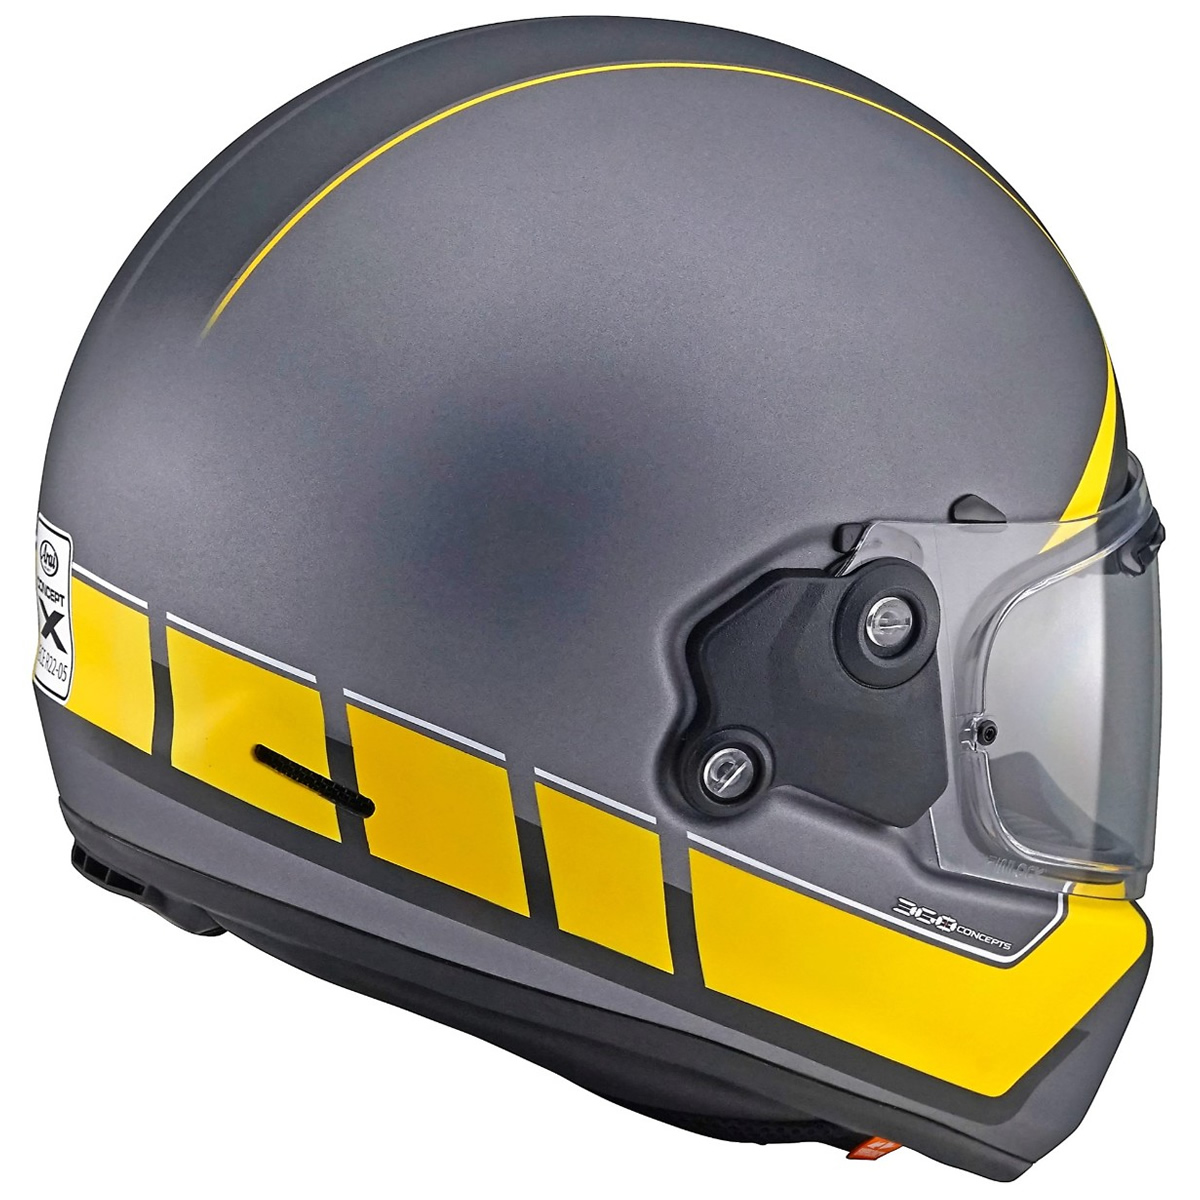 Arai Helm Concept-X Speedblock Yellow, grau-schwarz-gelb matt